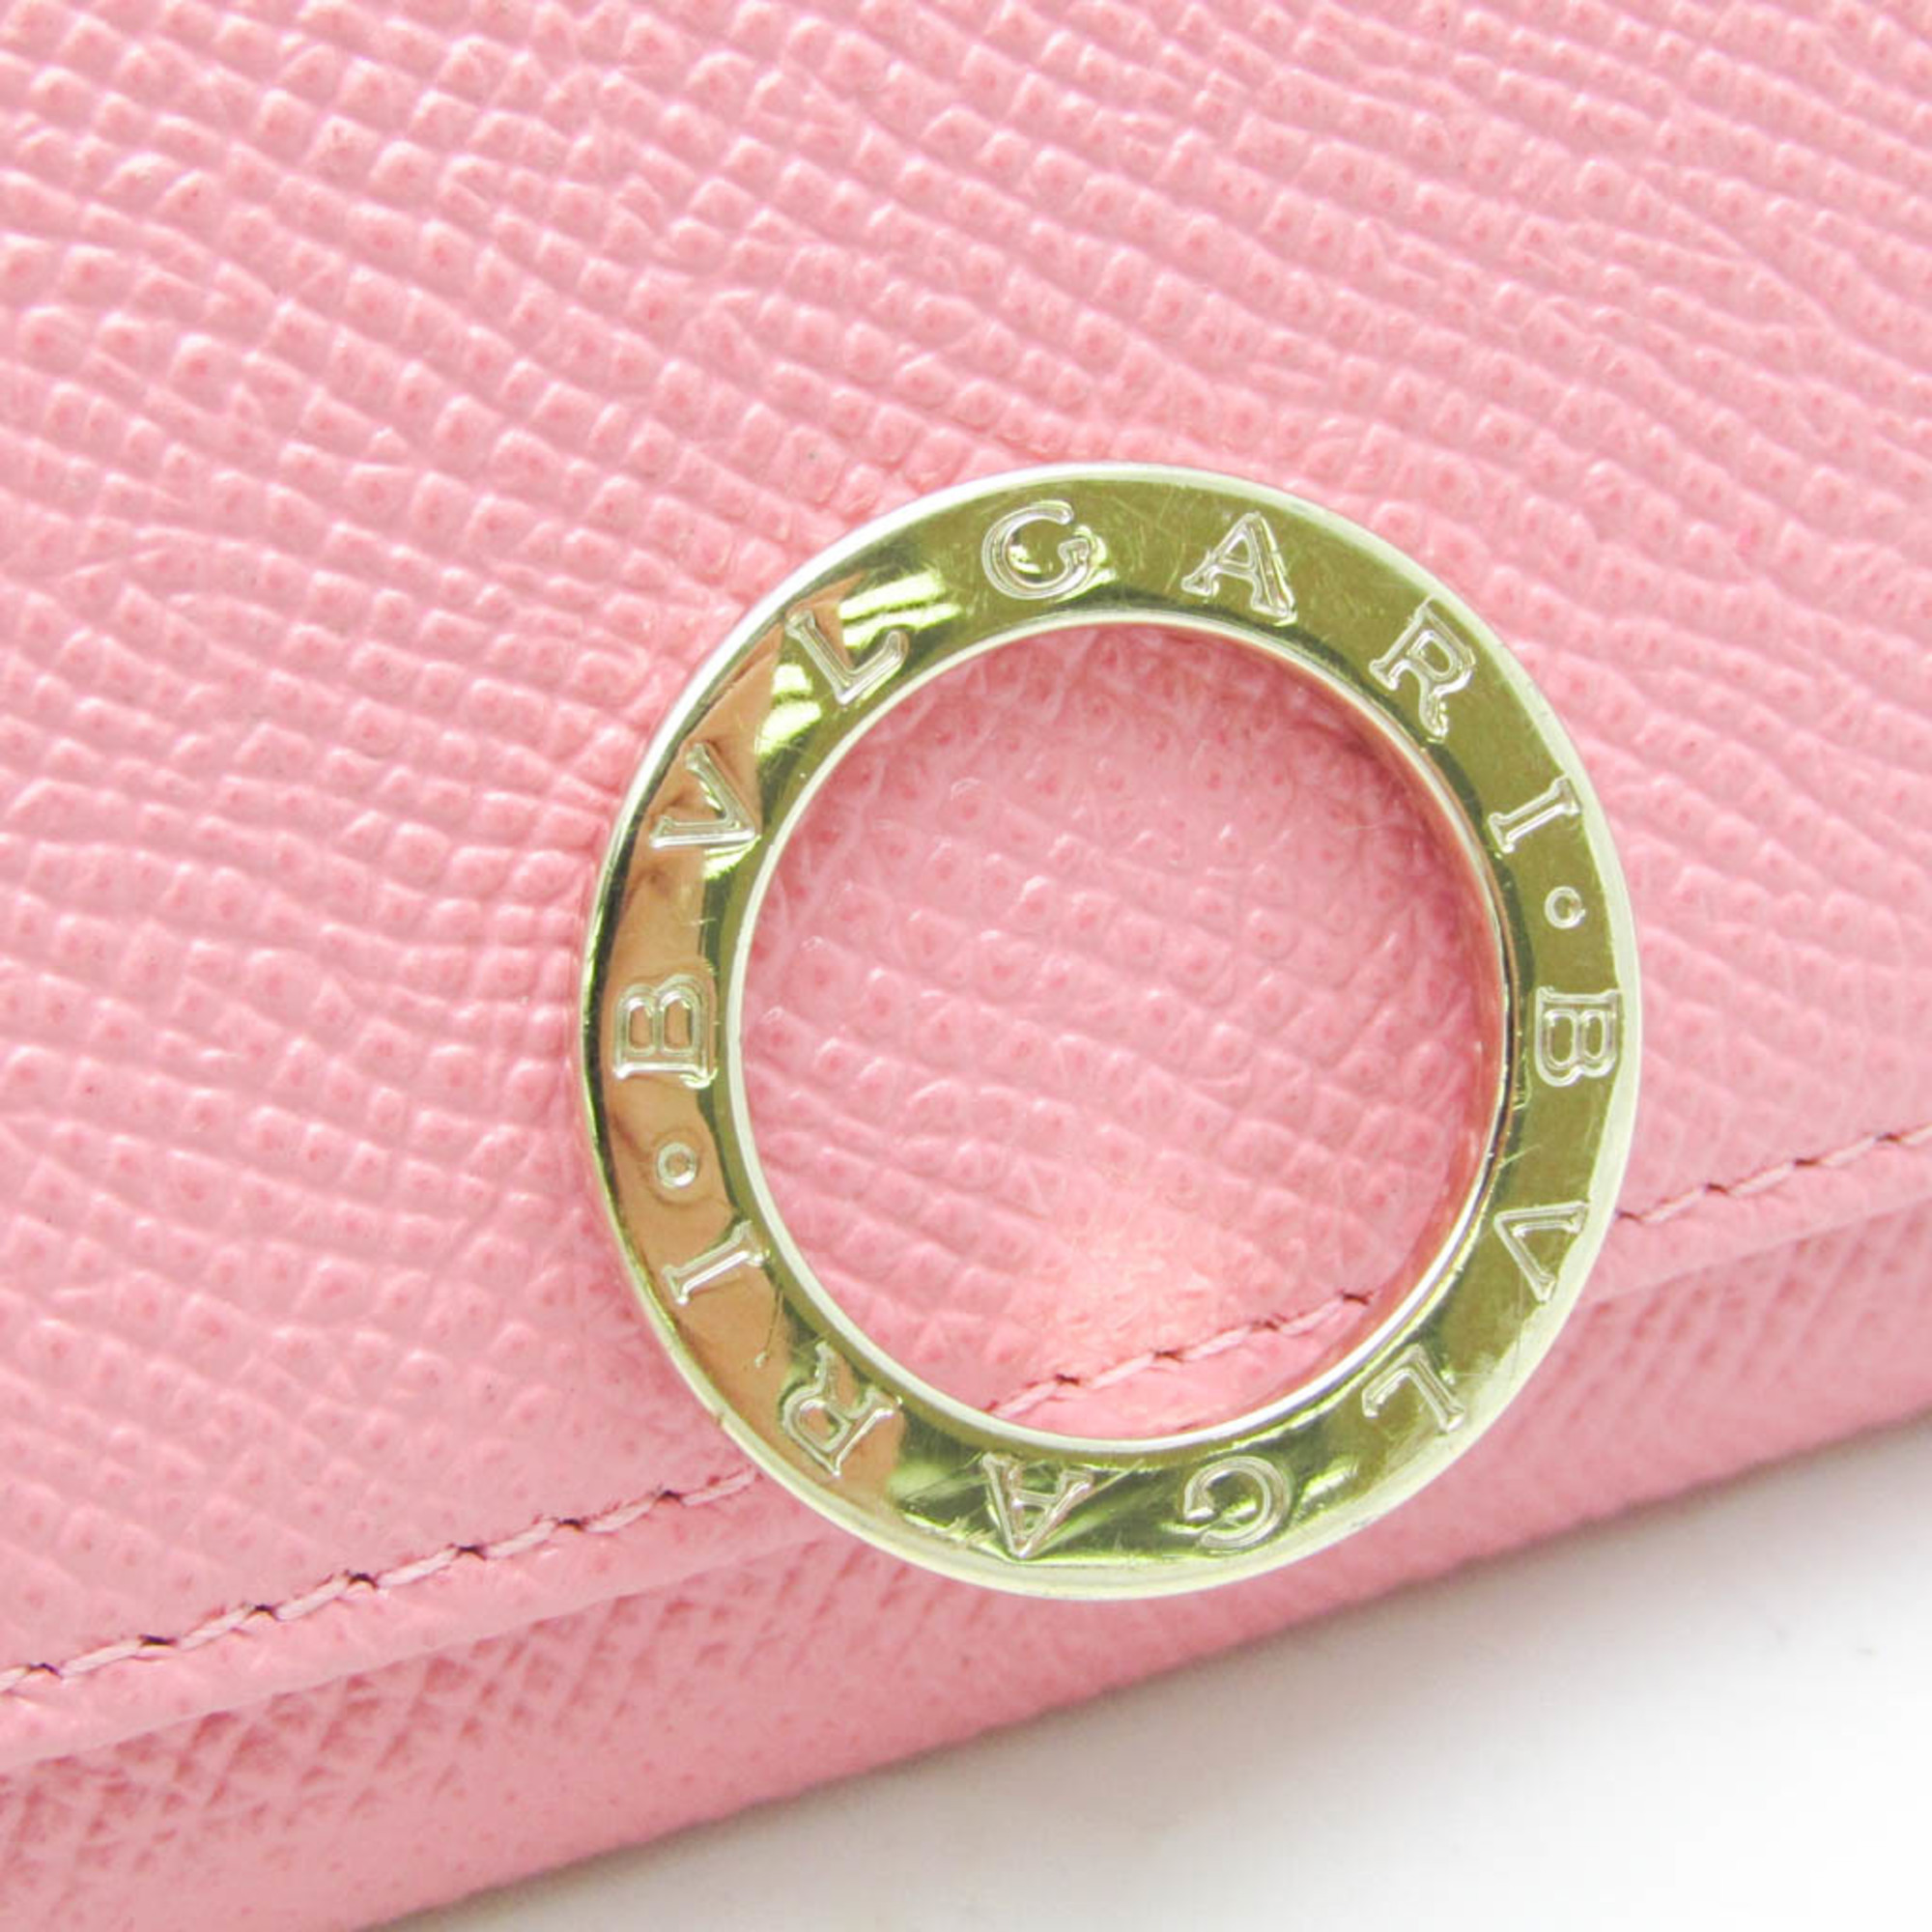 Bvlgari Bvlgari Bvlgari Card Case 287496 Women's Leather Coin Purse/coin Case Light Pink